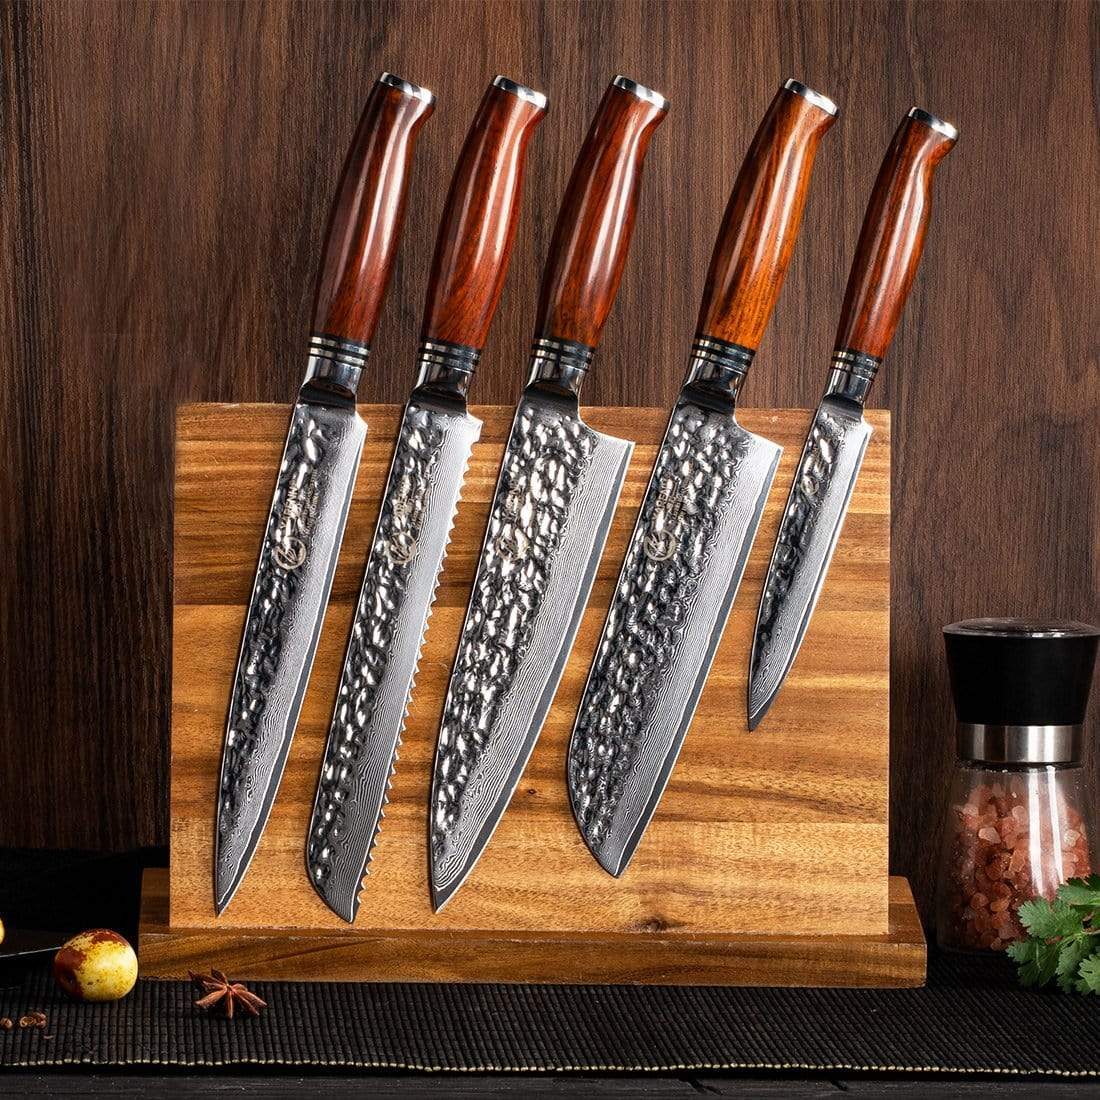 HTT Series - Damascus sashimi Knives Set 5 Piece yarenh Damascus Steel